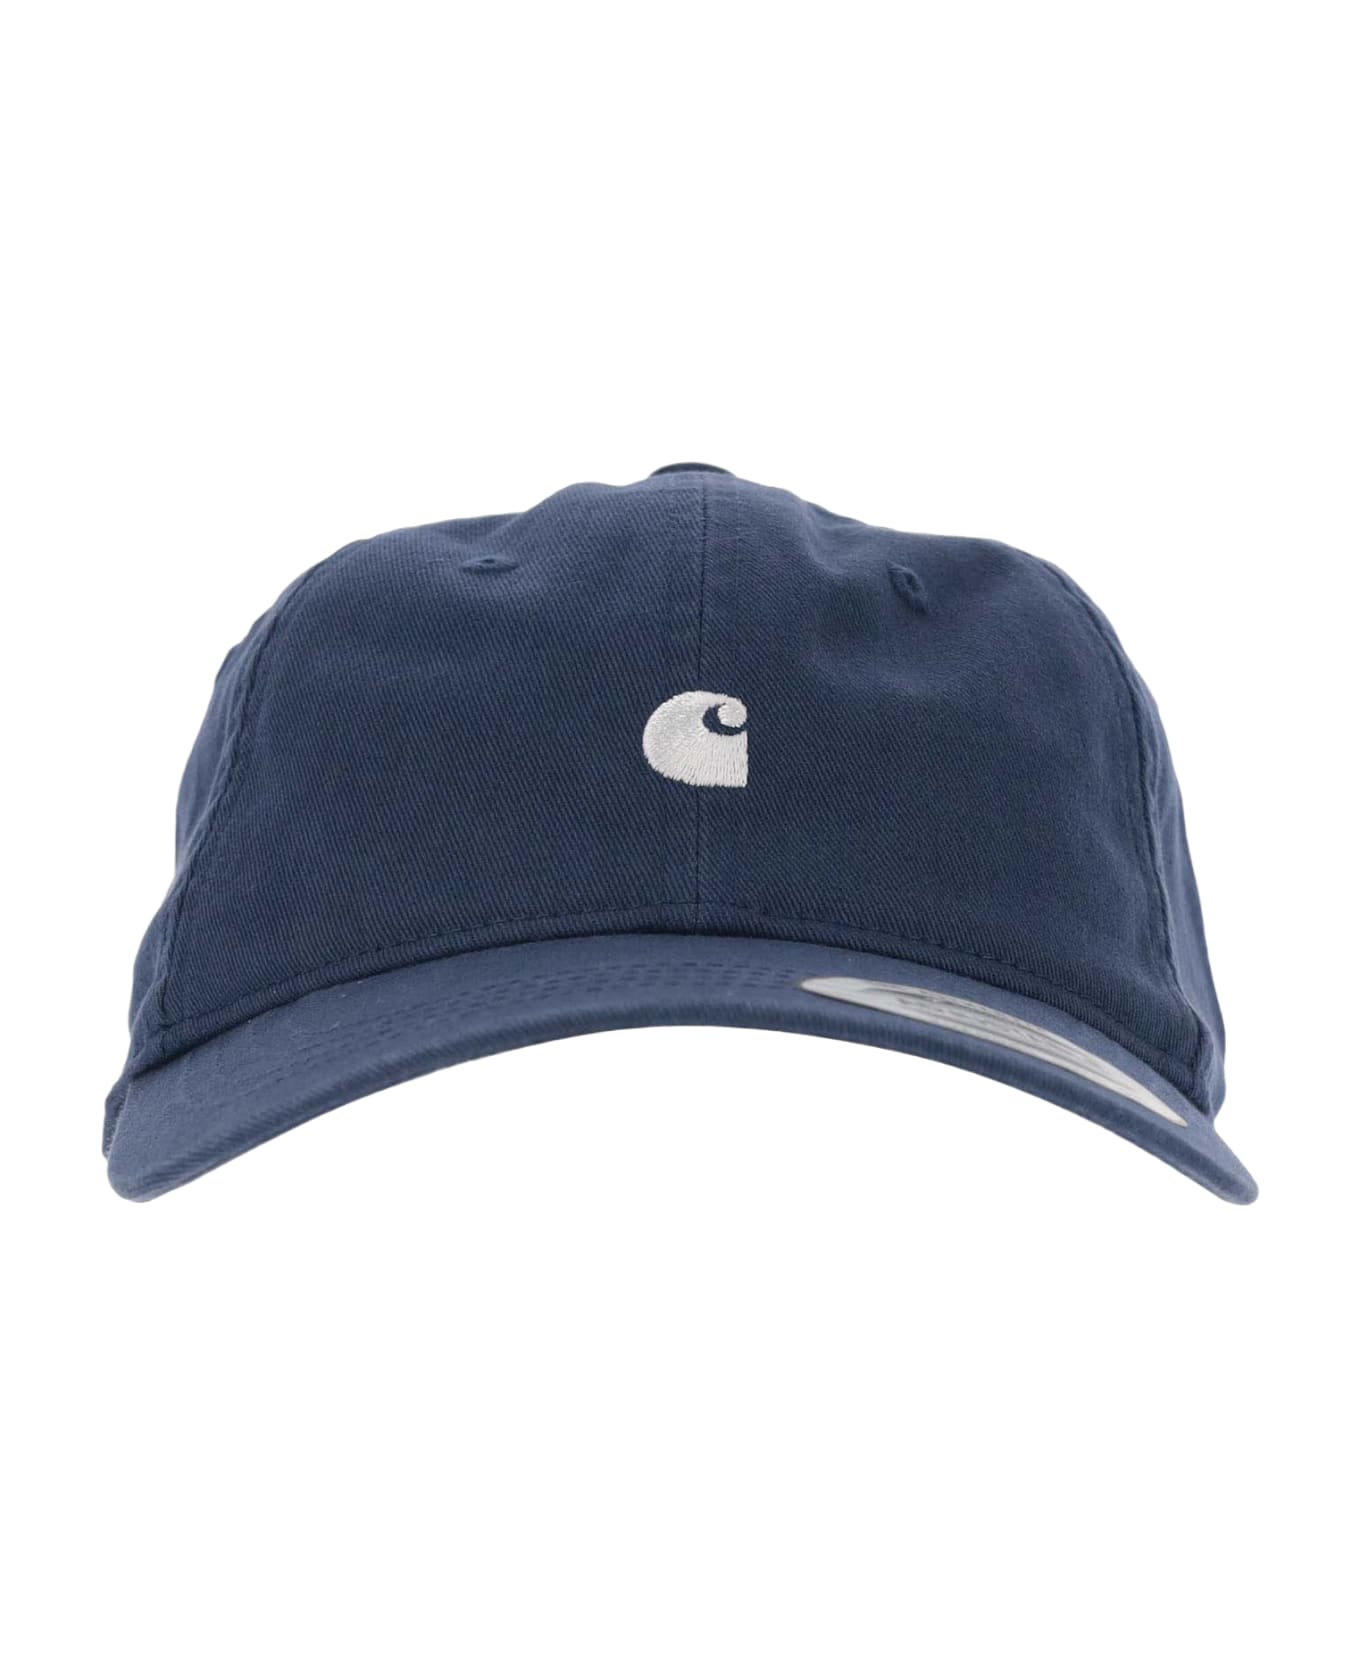 Carhartt Canvas Hat With Logo - Blue 帽子